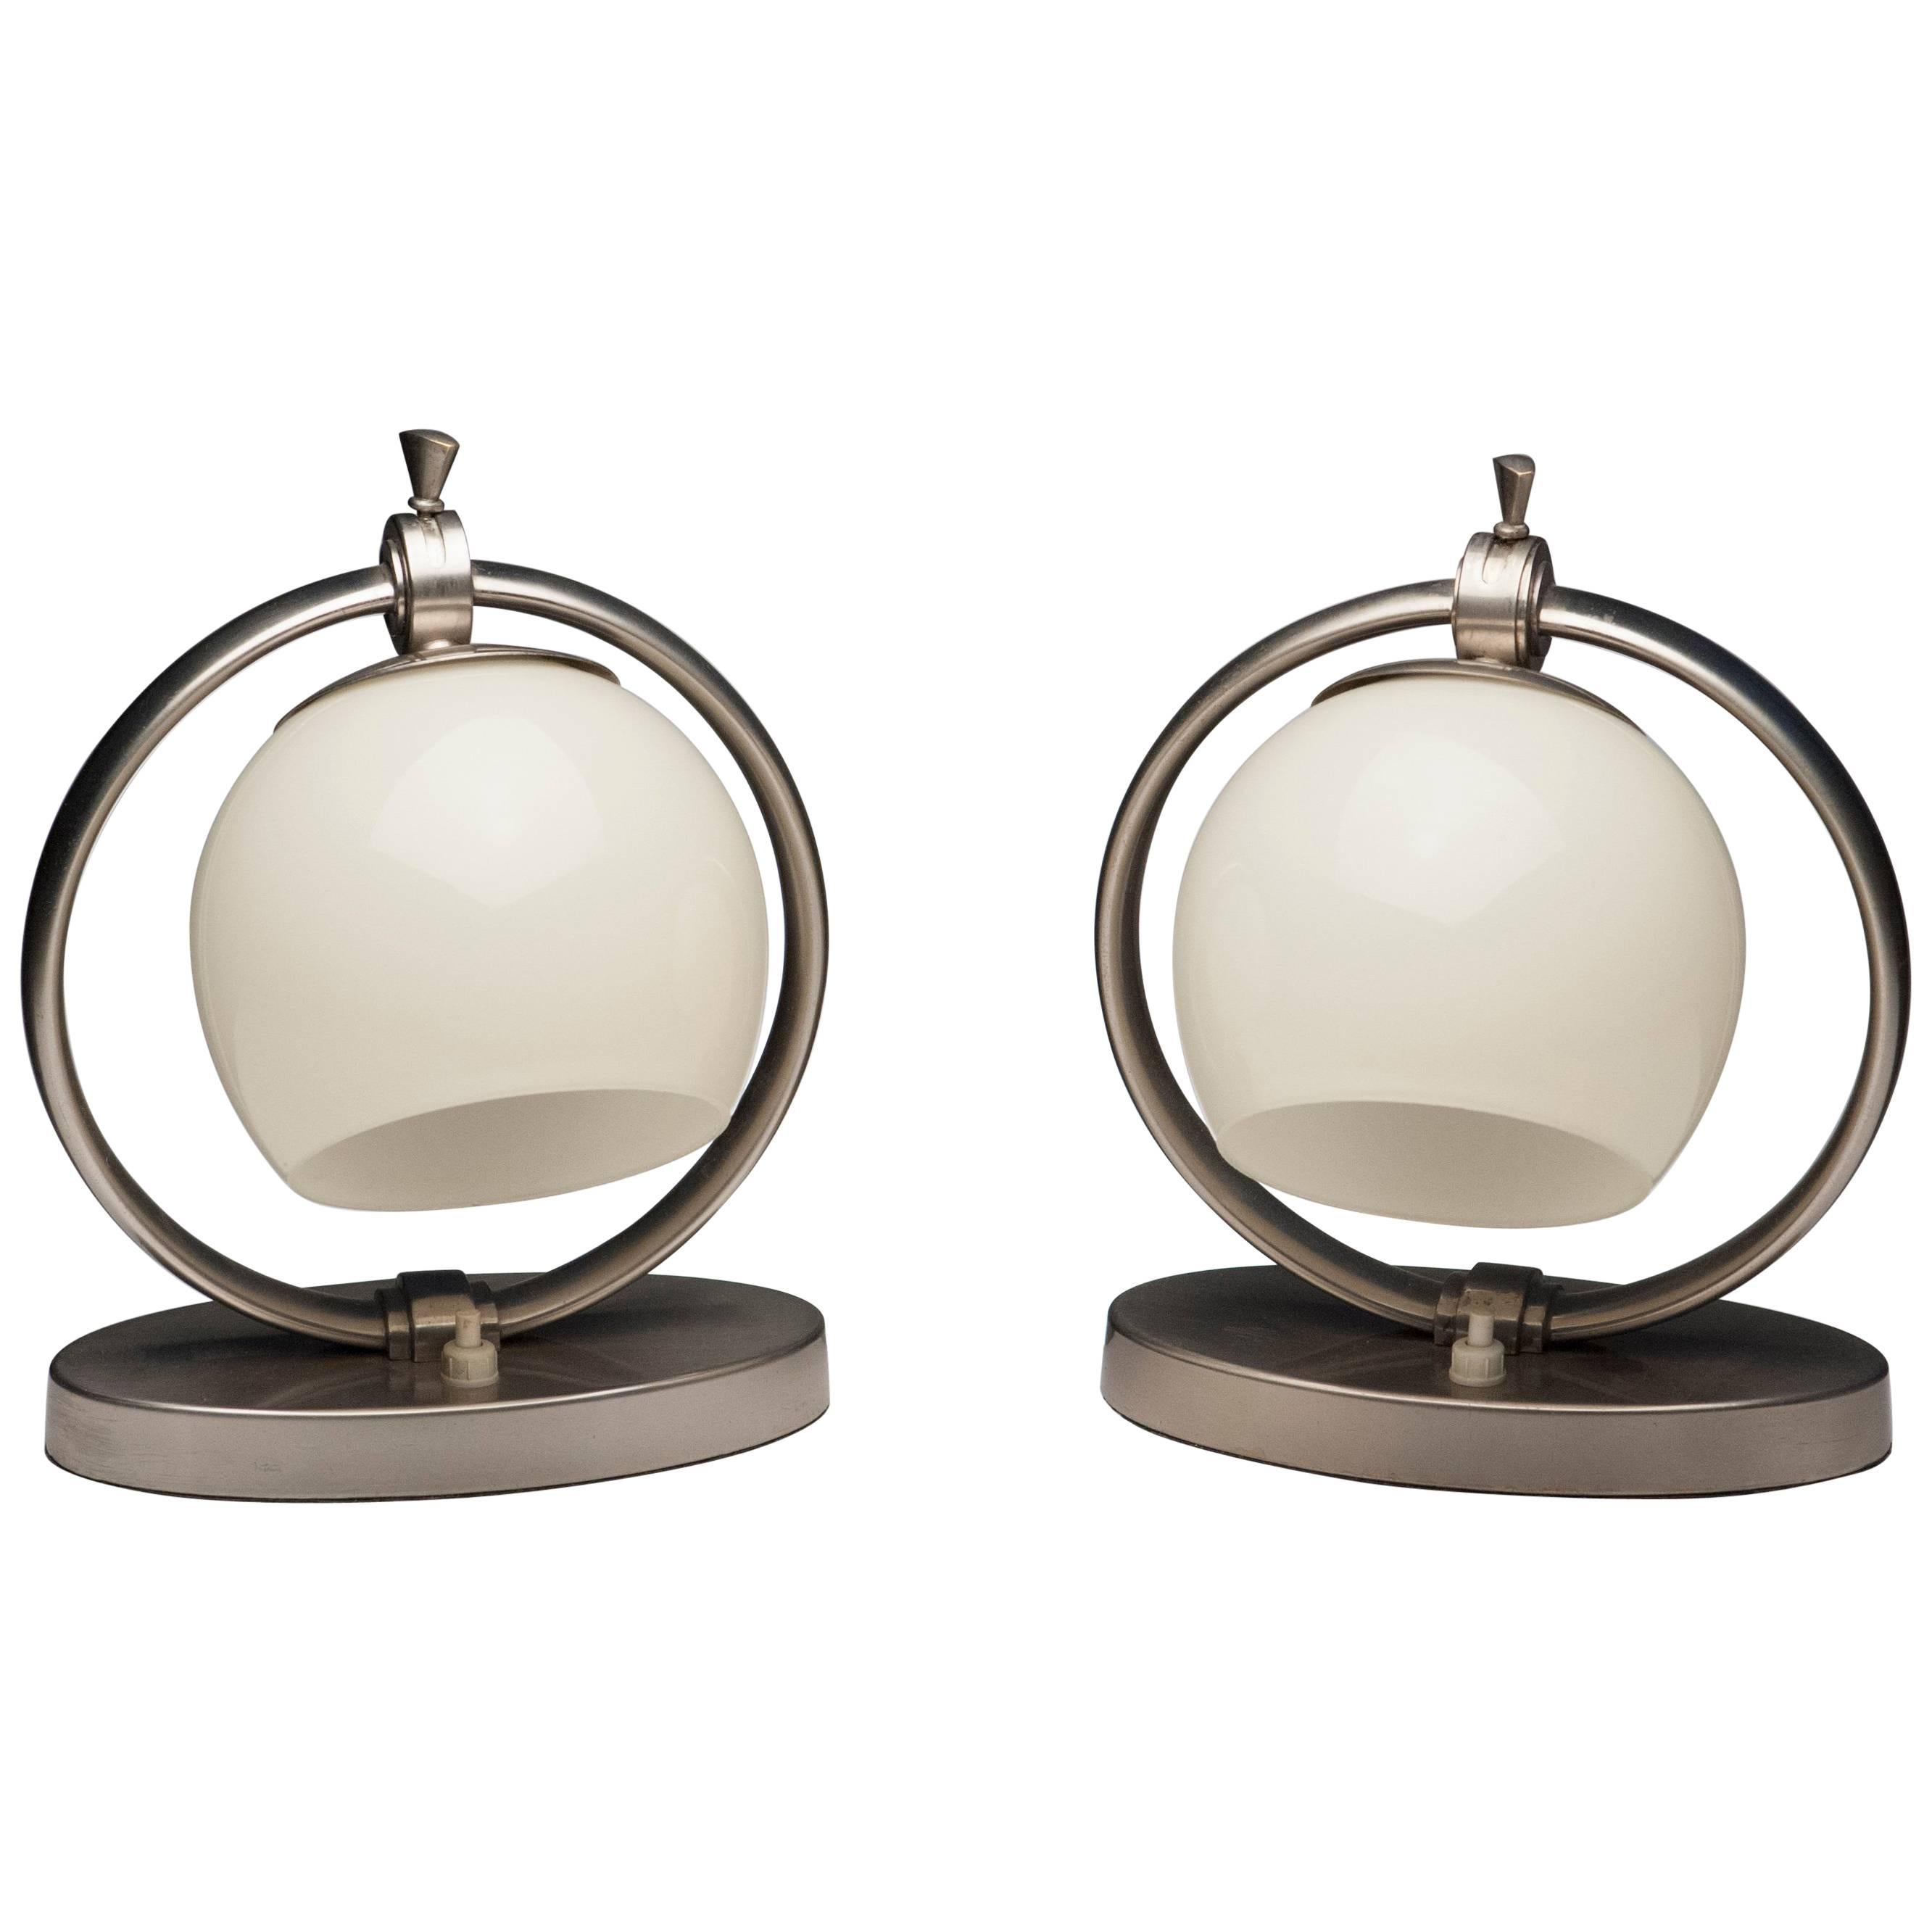 Vintage Modern Bauhaus Pair of Desk Lamps by WMF